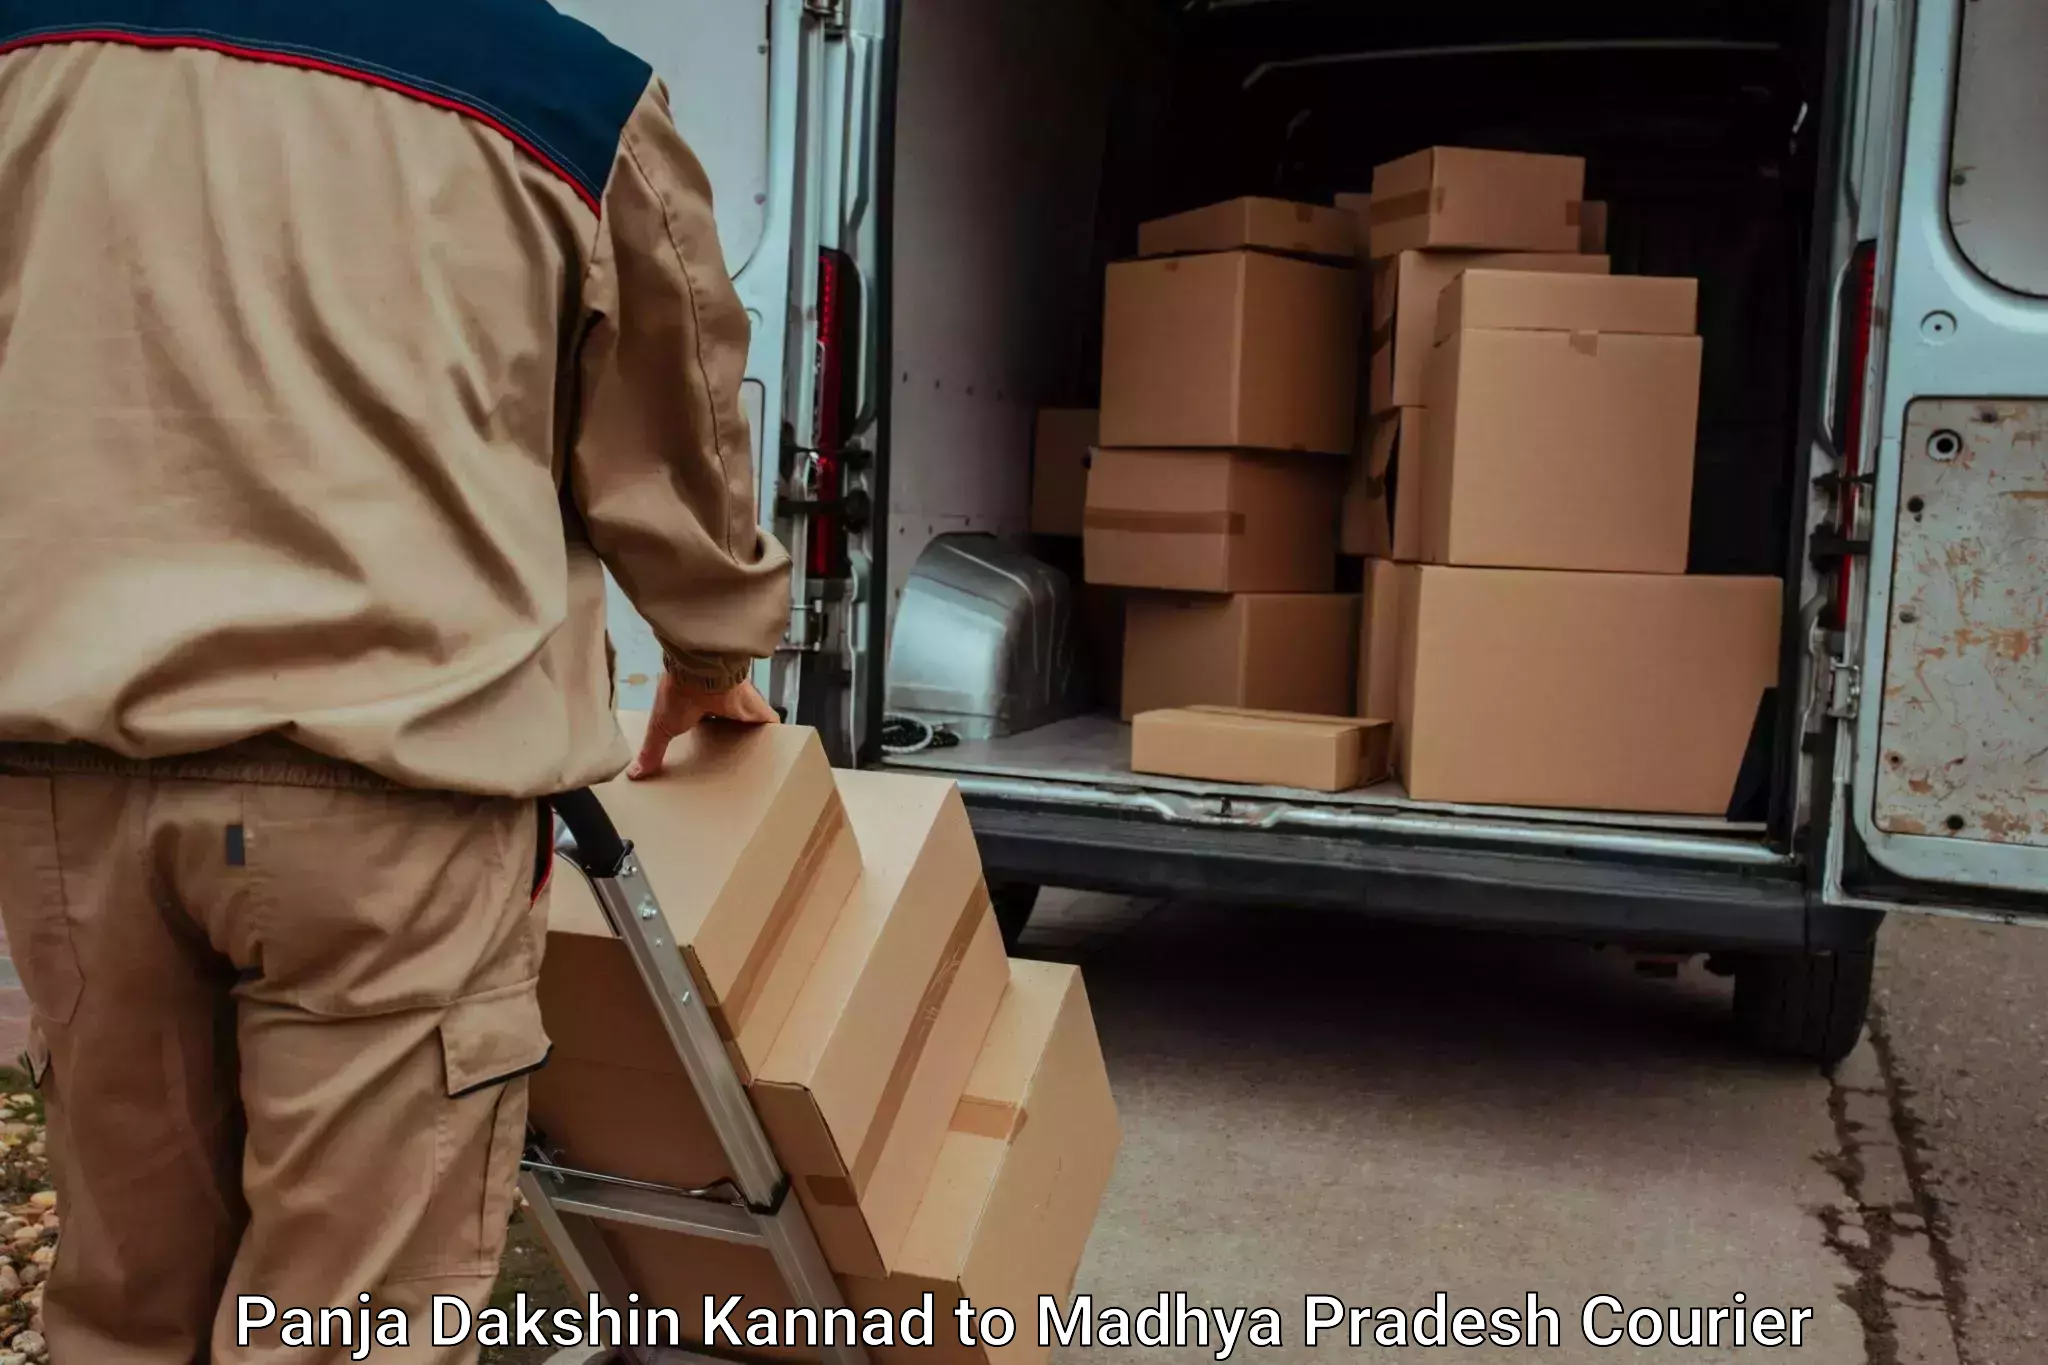 Same day luggage service Panja Dakshin Kannad to IIT Indore